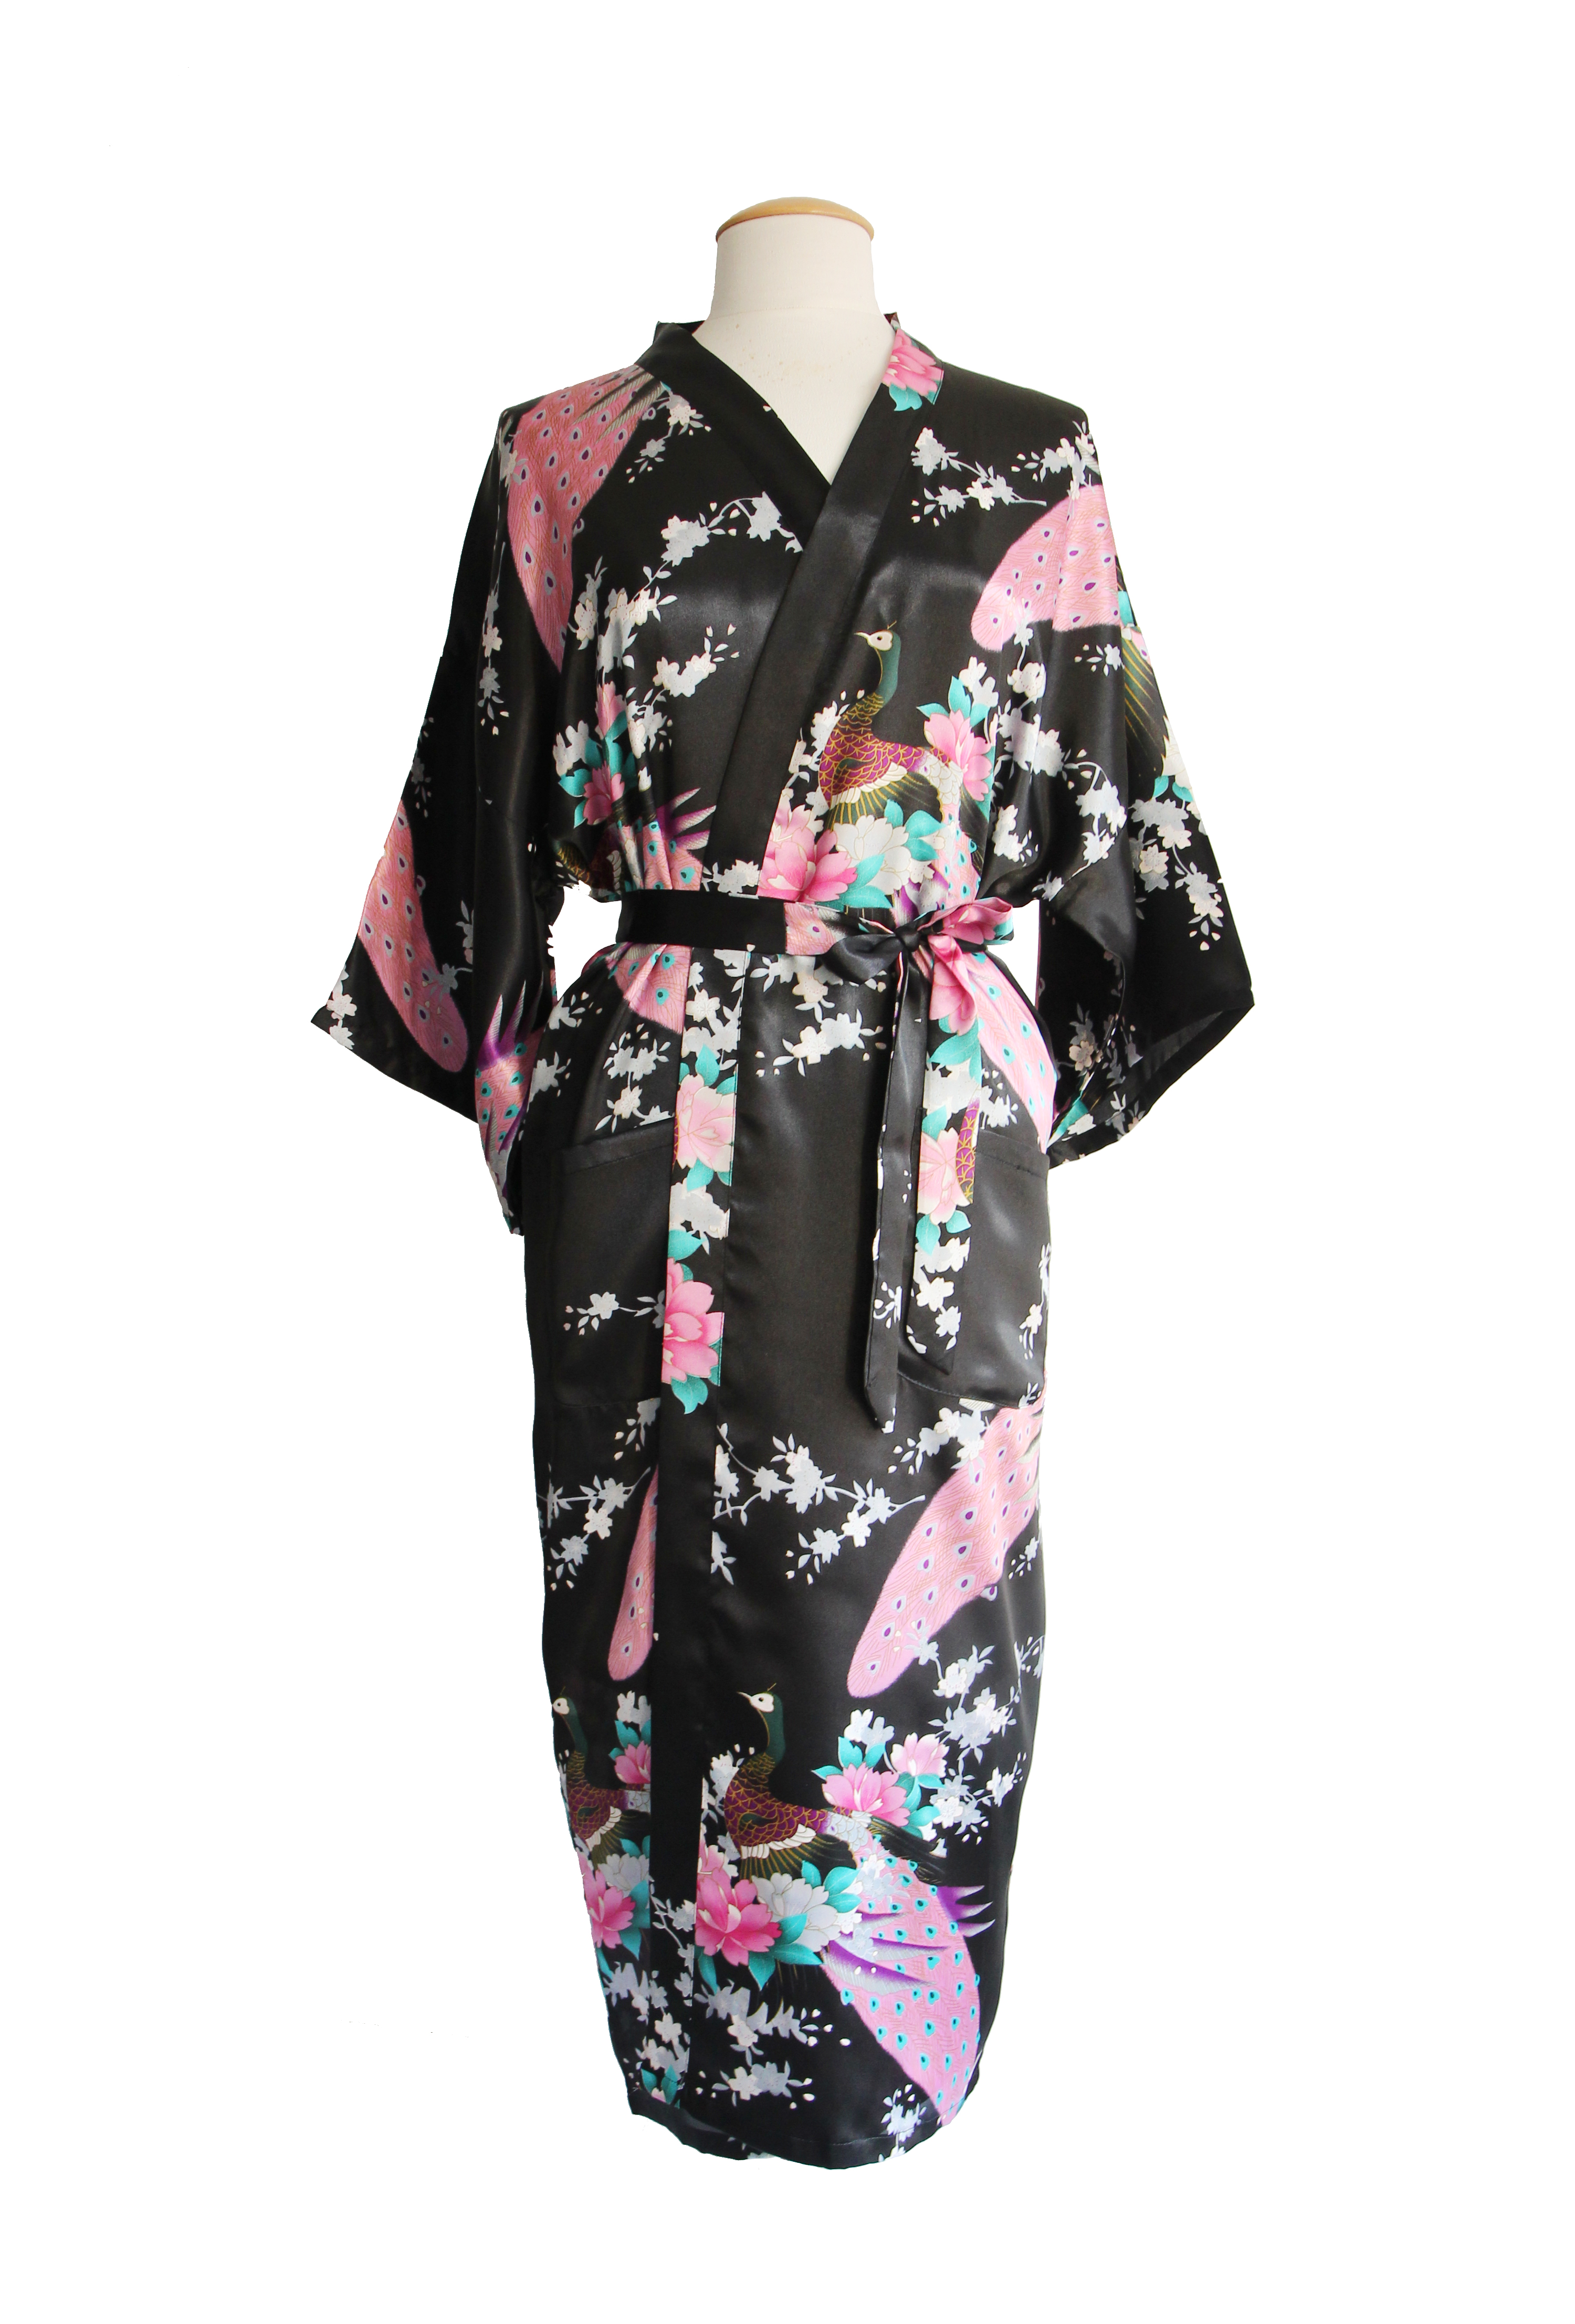 Zwarte kimono satijn badjas geisha ochtendjas yukata kopen?